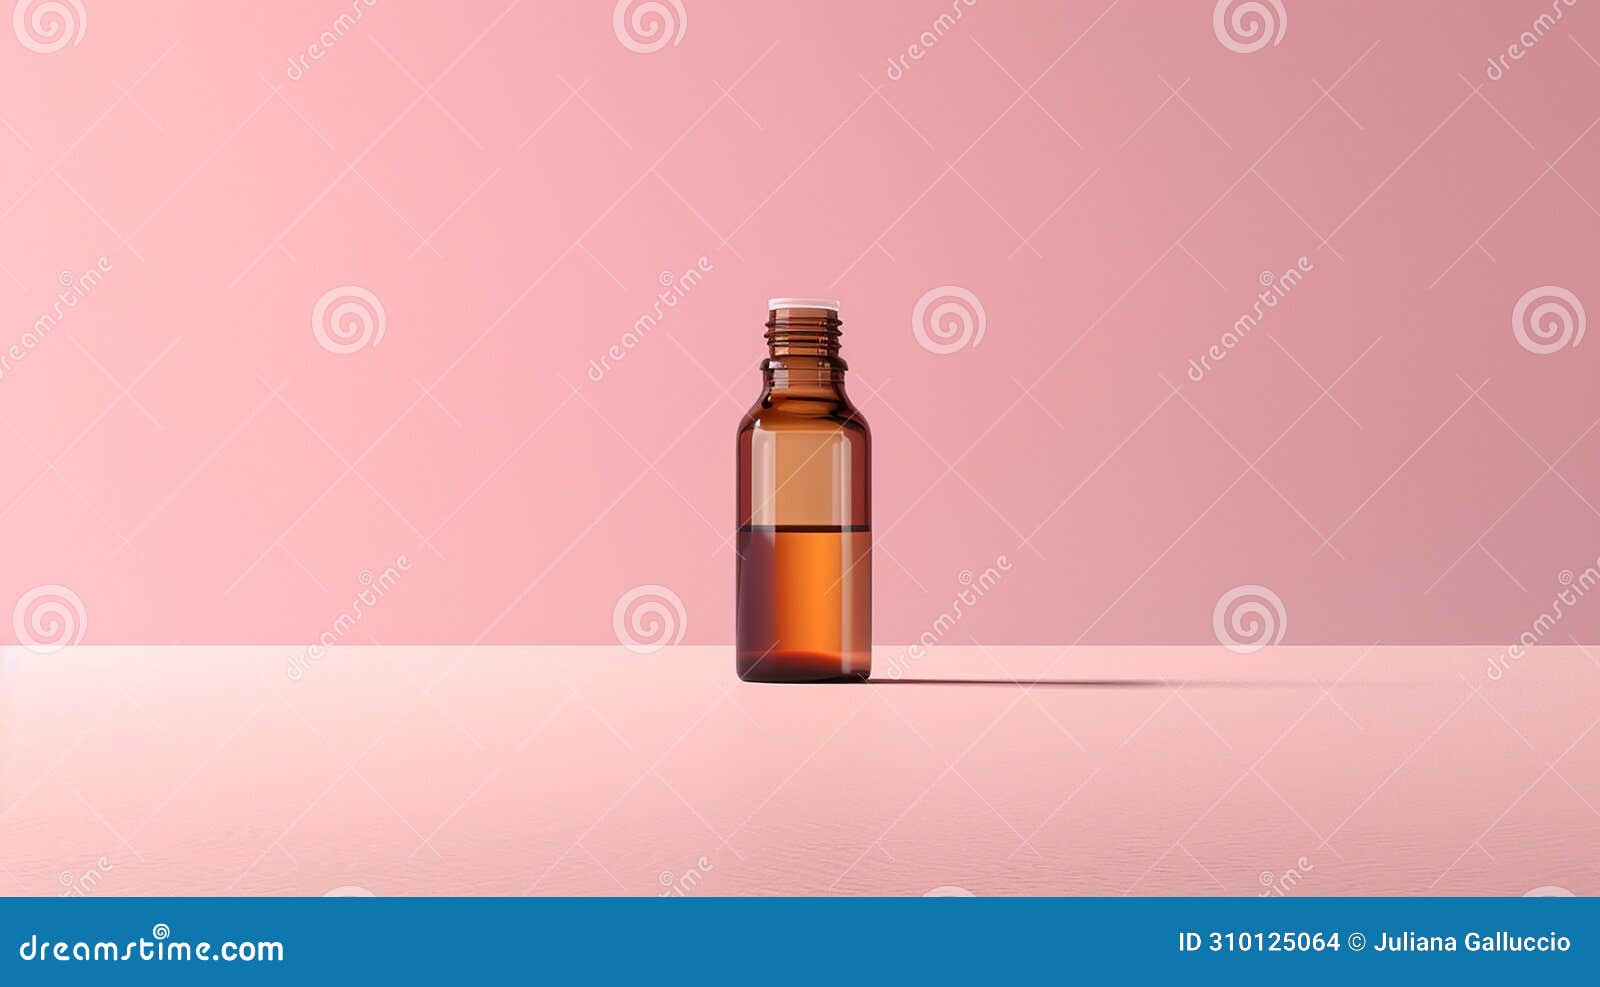 oil fragrances glass bottle mockup